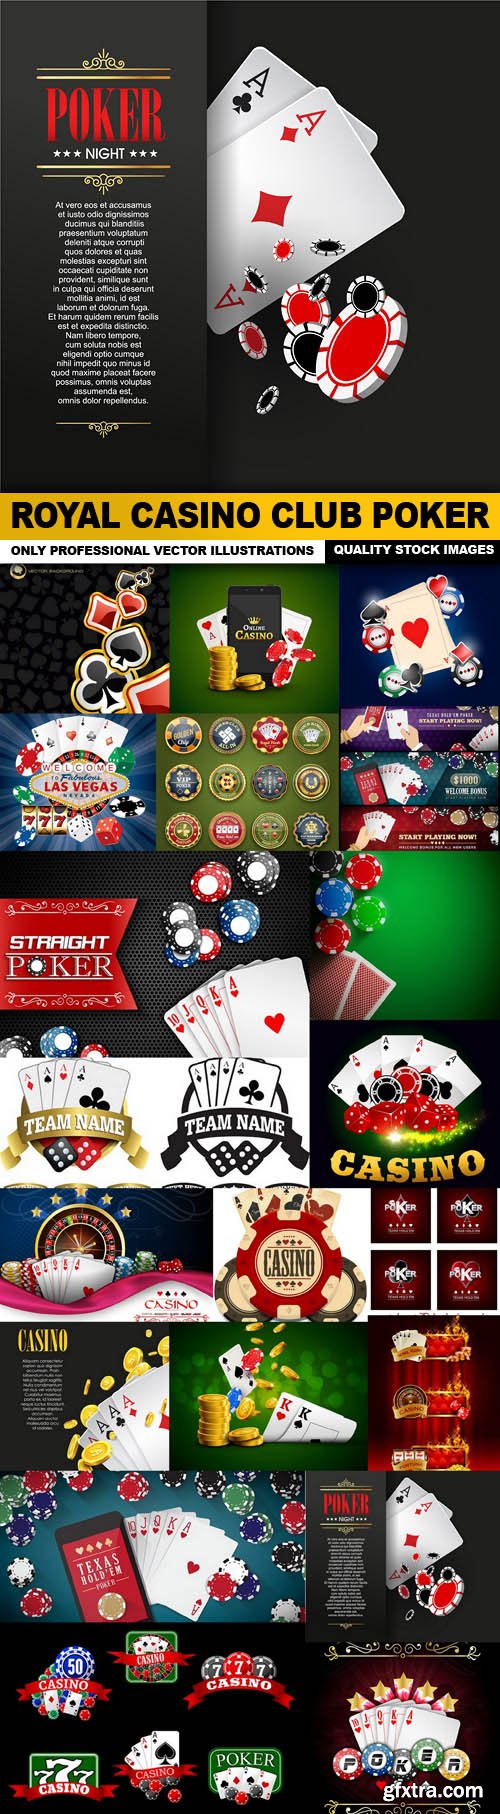 Royal Casino Club Poker - 20 Vector